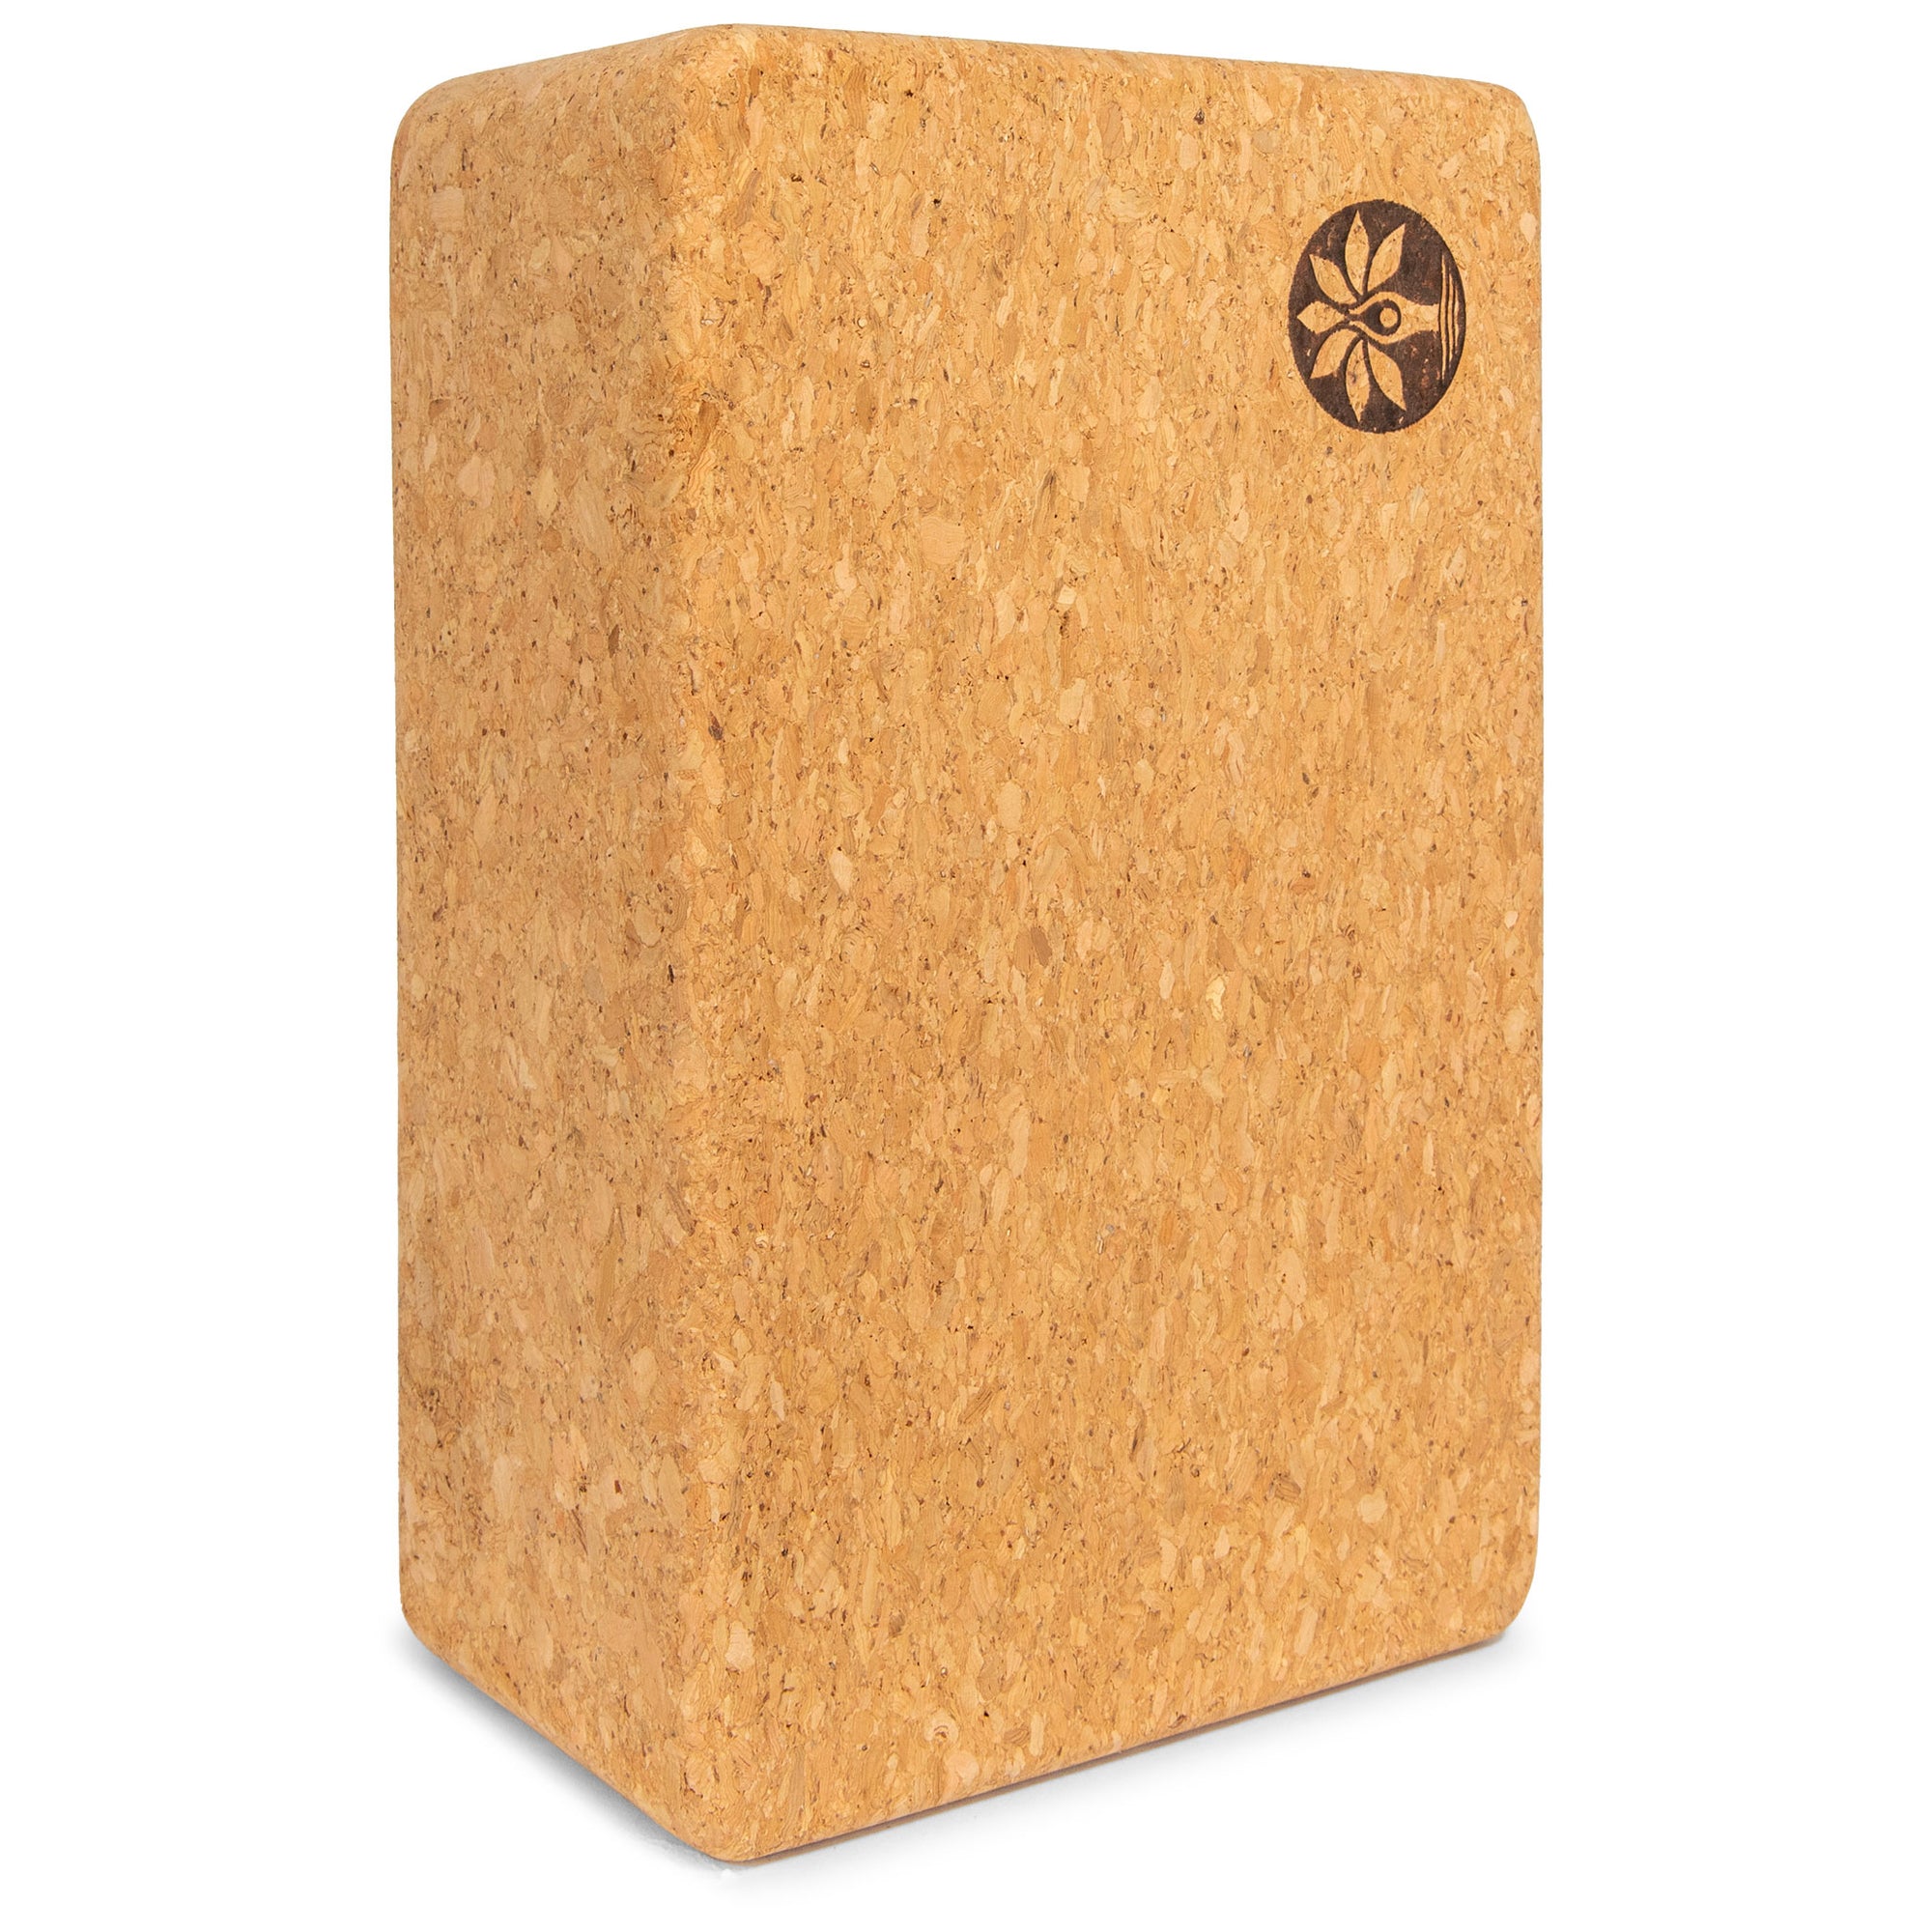 Cork block pack